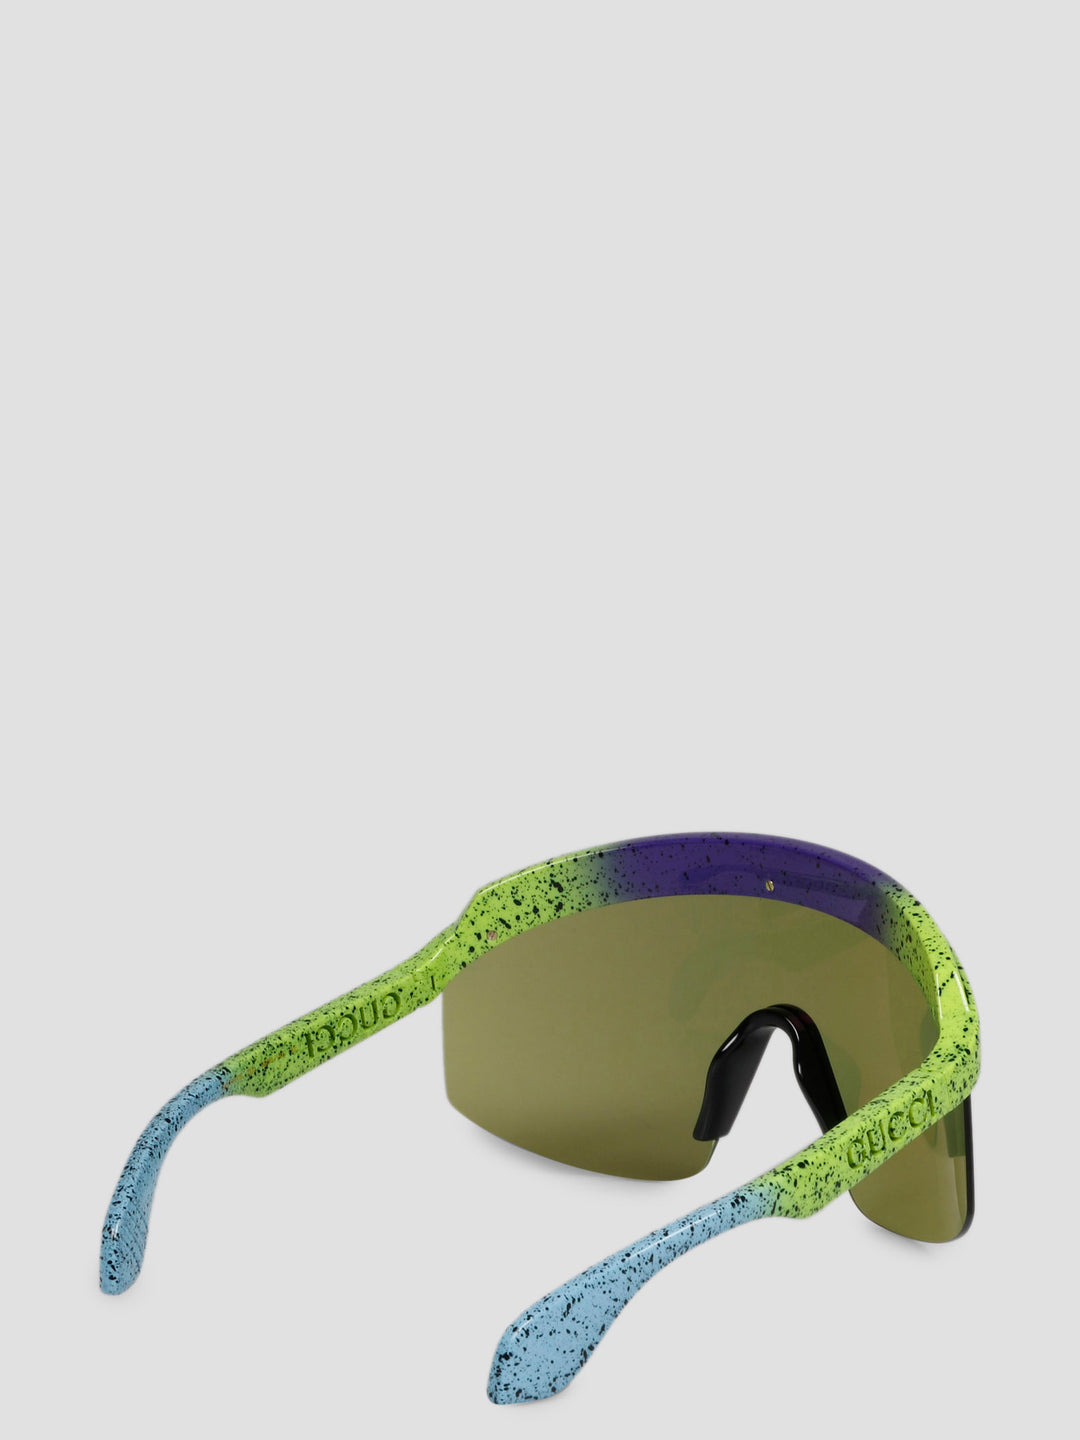 Mask frame sunglasses